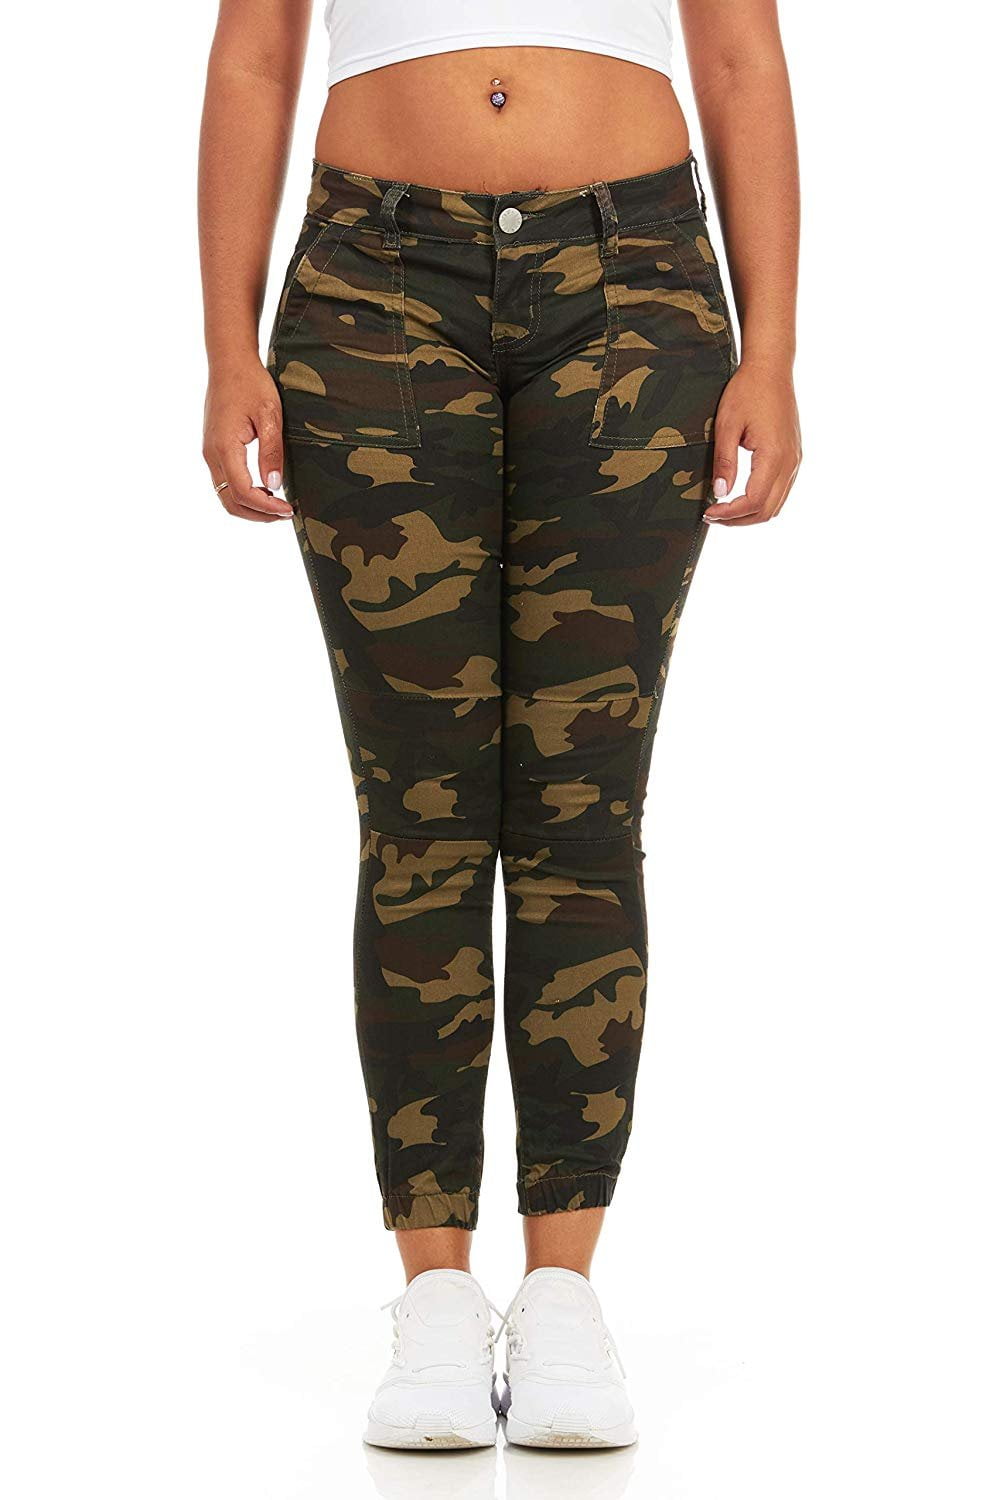 CG JEANS Plus Size Junior Army Camouflage Skinny Ladies Stretch Joggers, 16 - Walmart.com